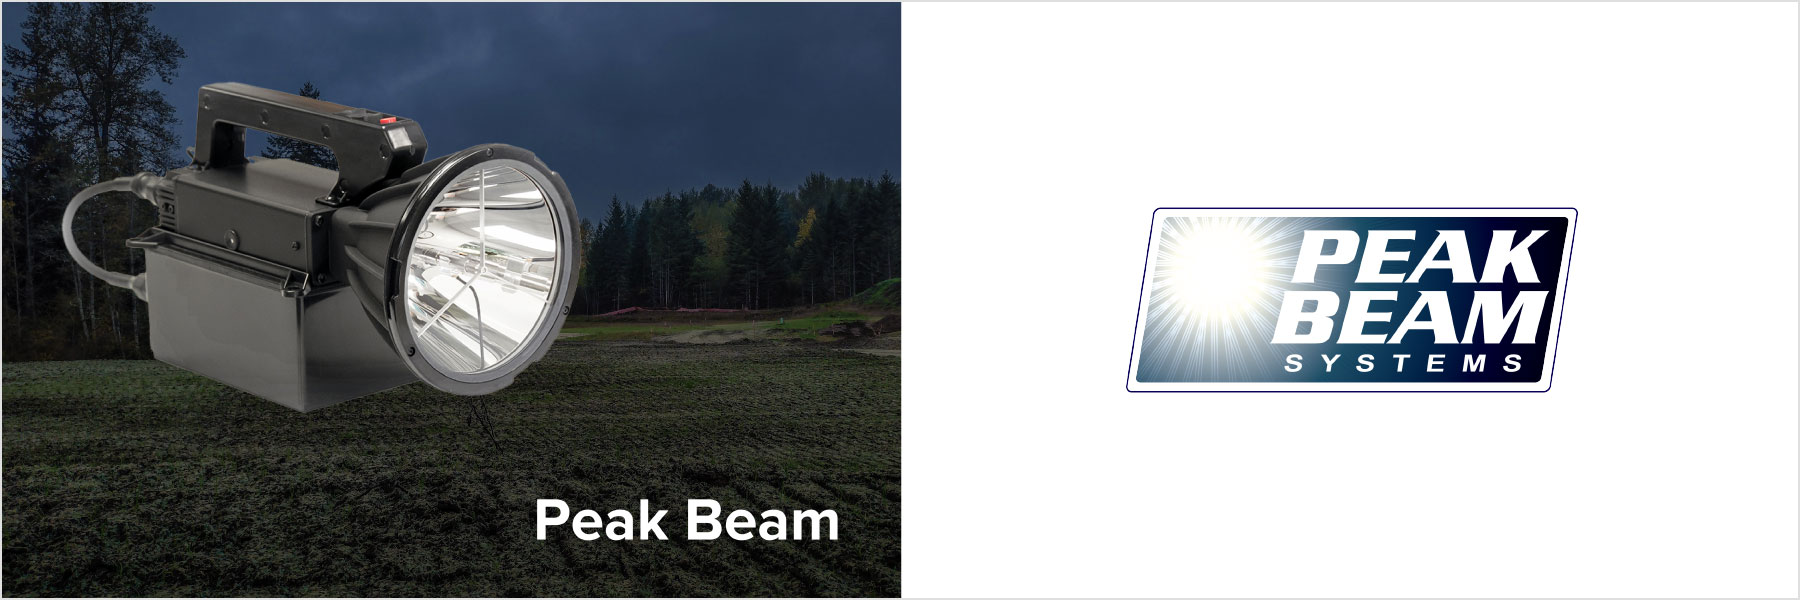 Peak Beam Systems